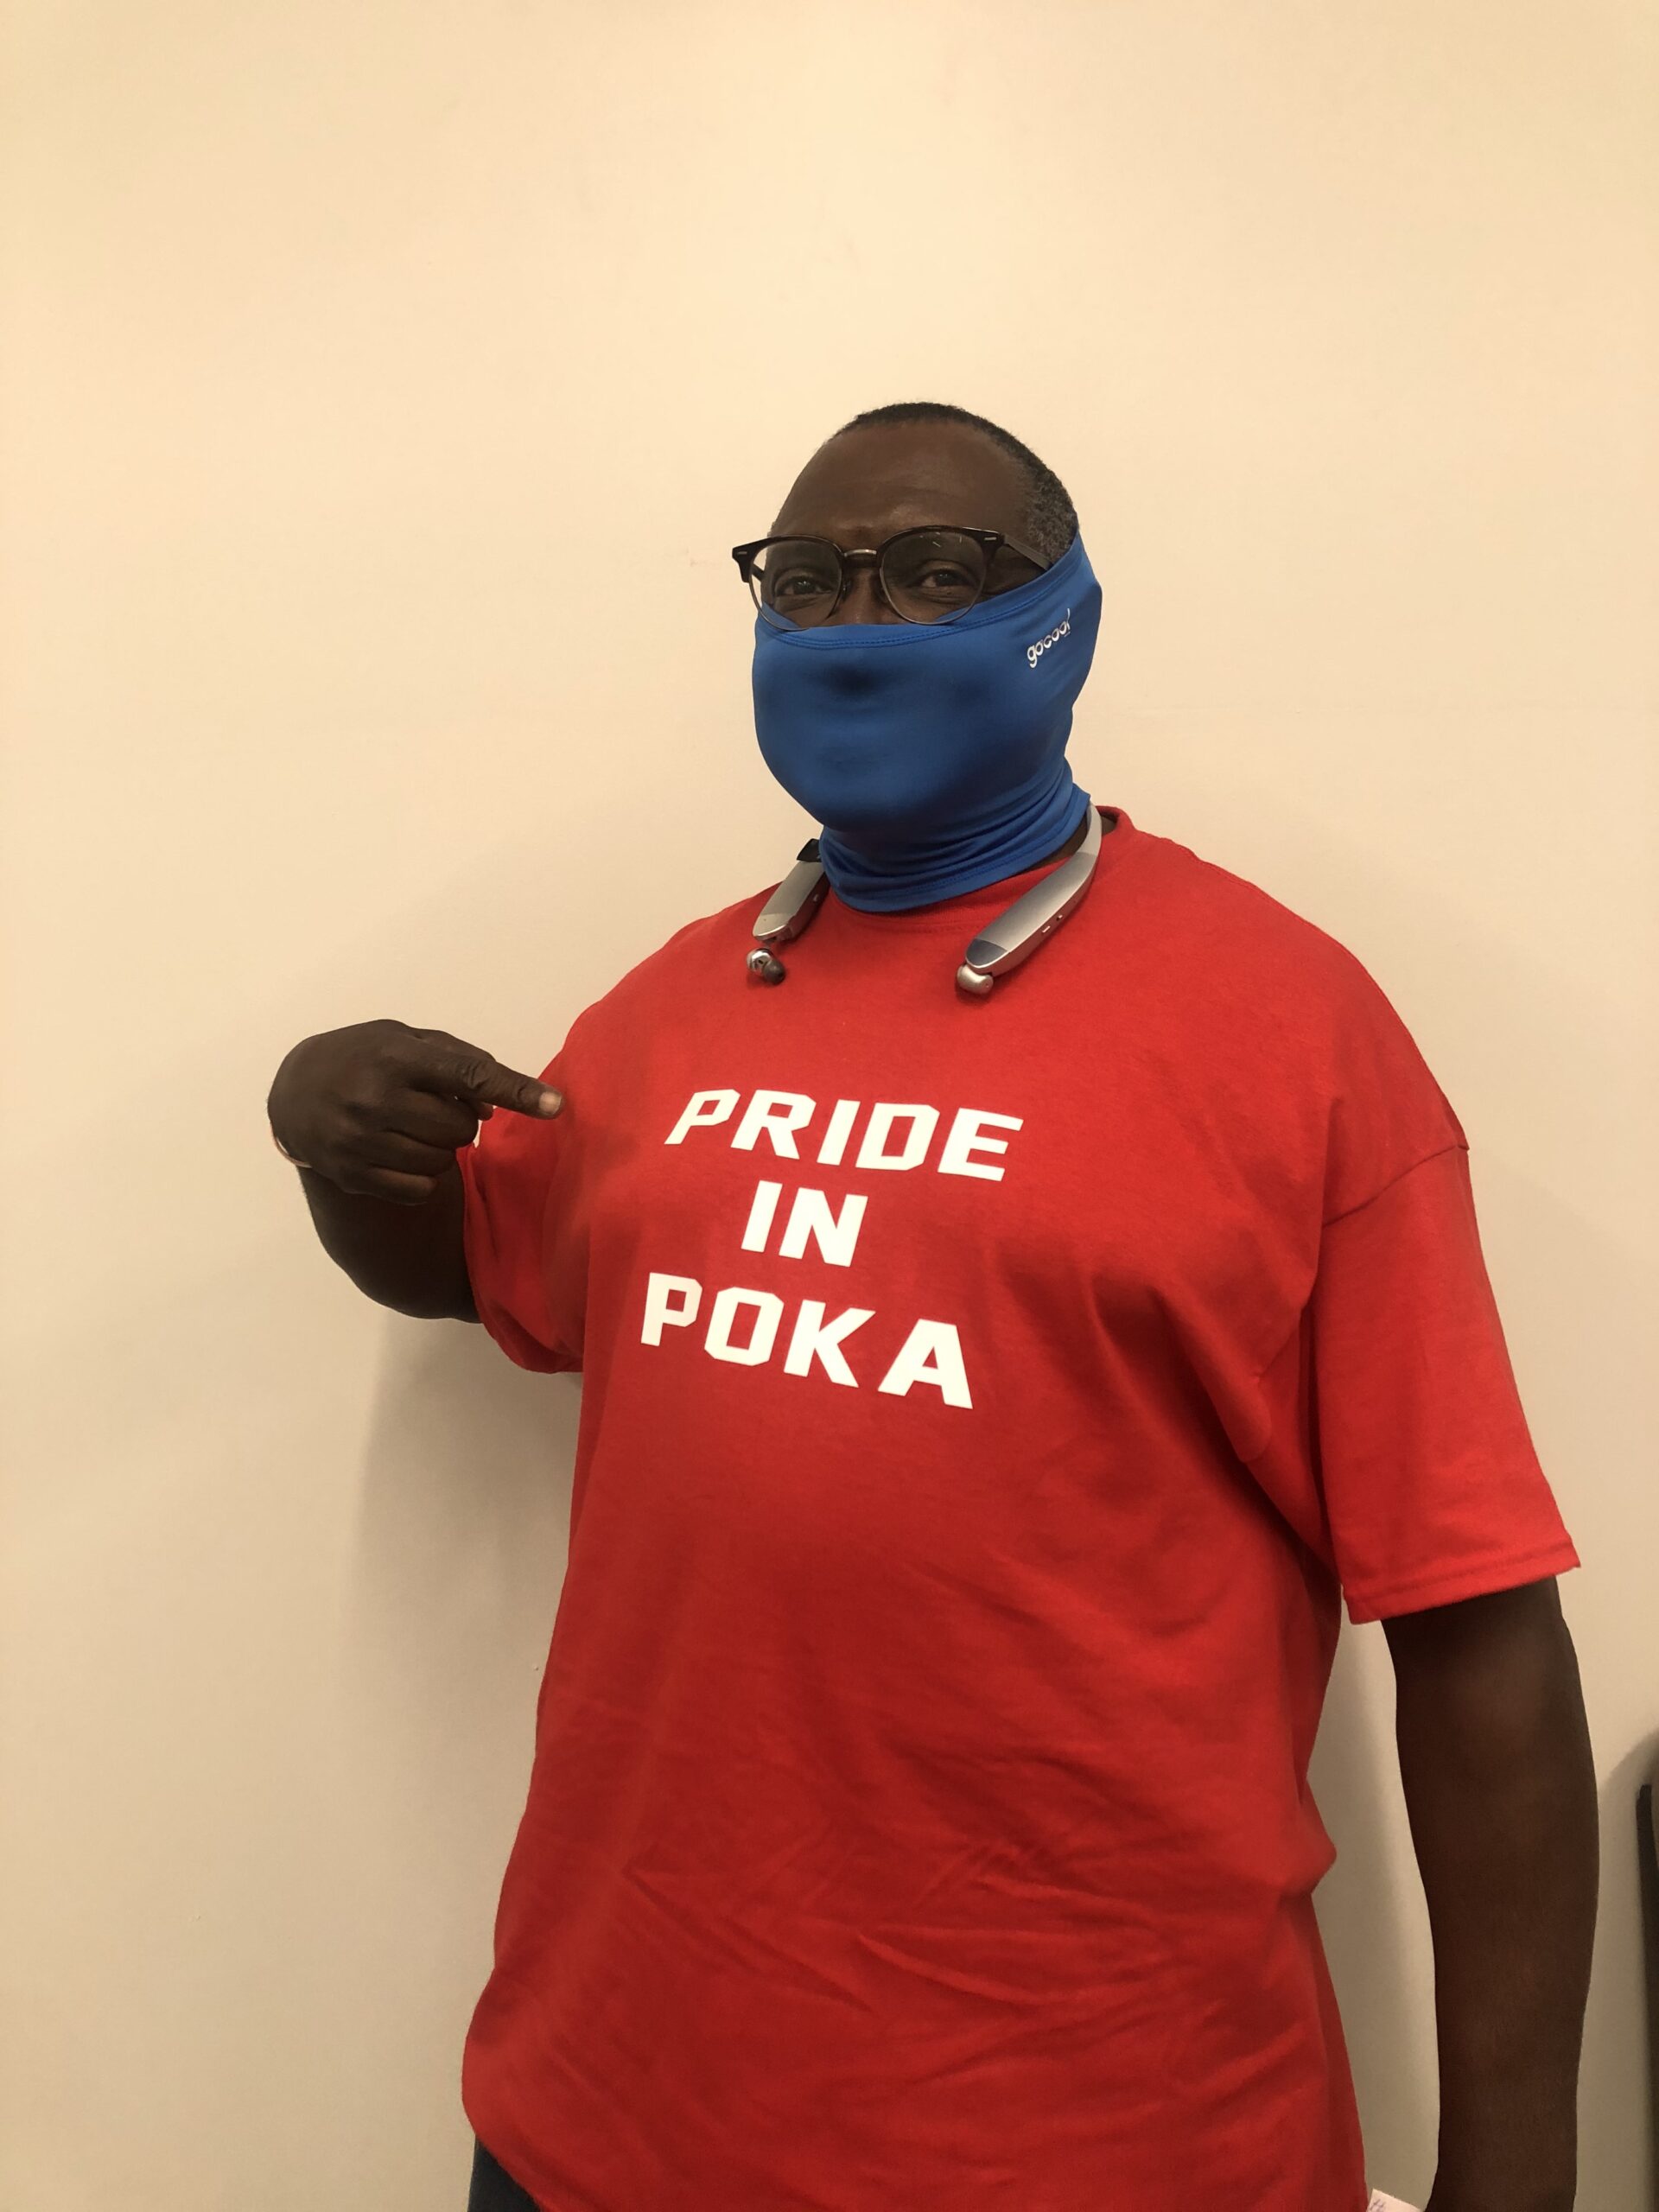 Lee County Commission talks: “Pride In ‘Poka”